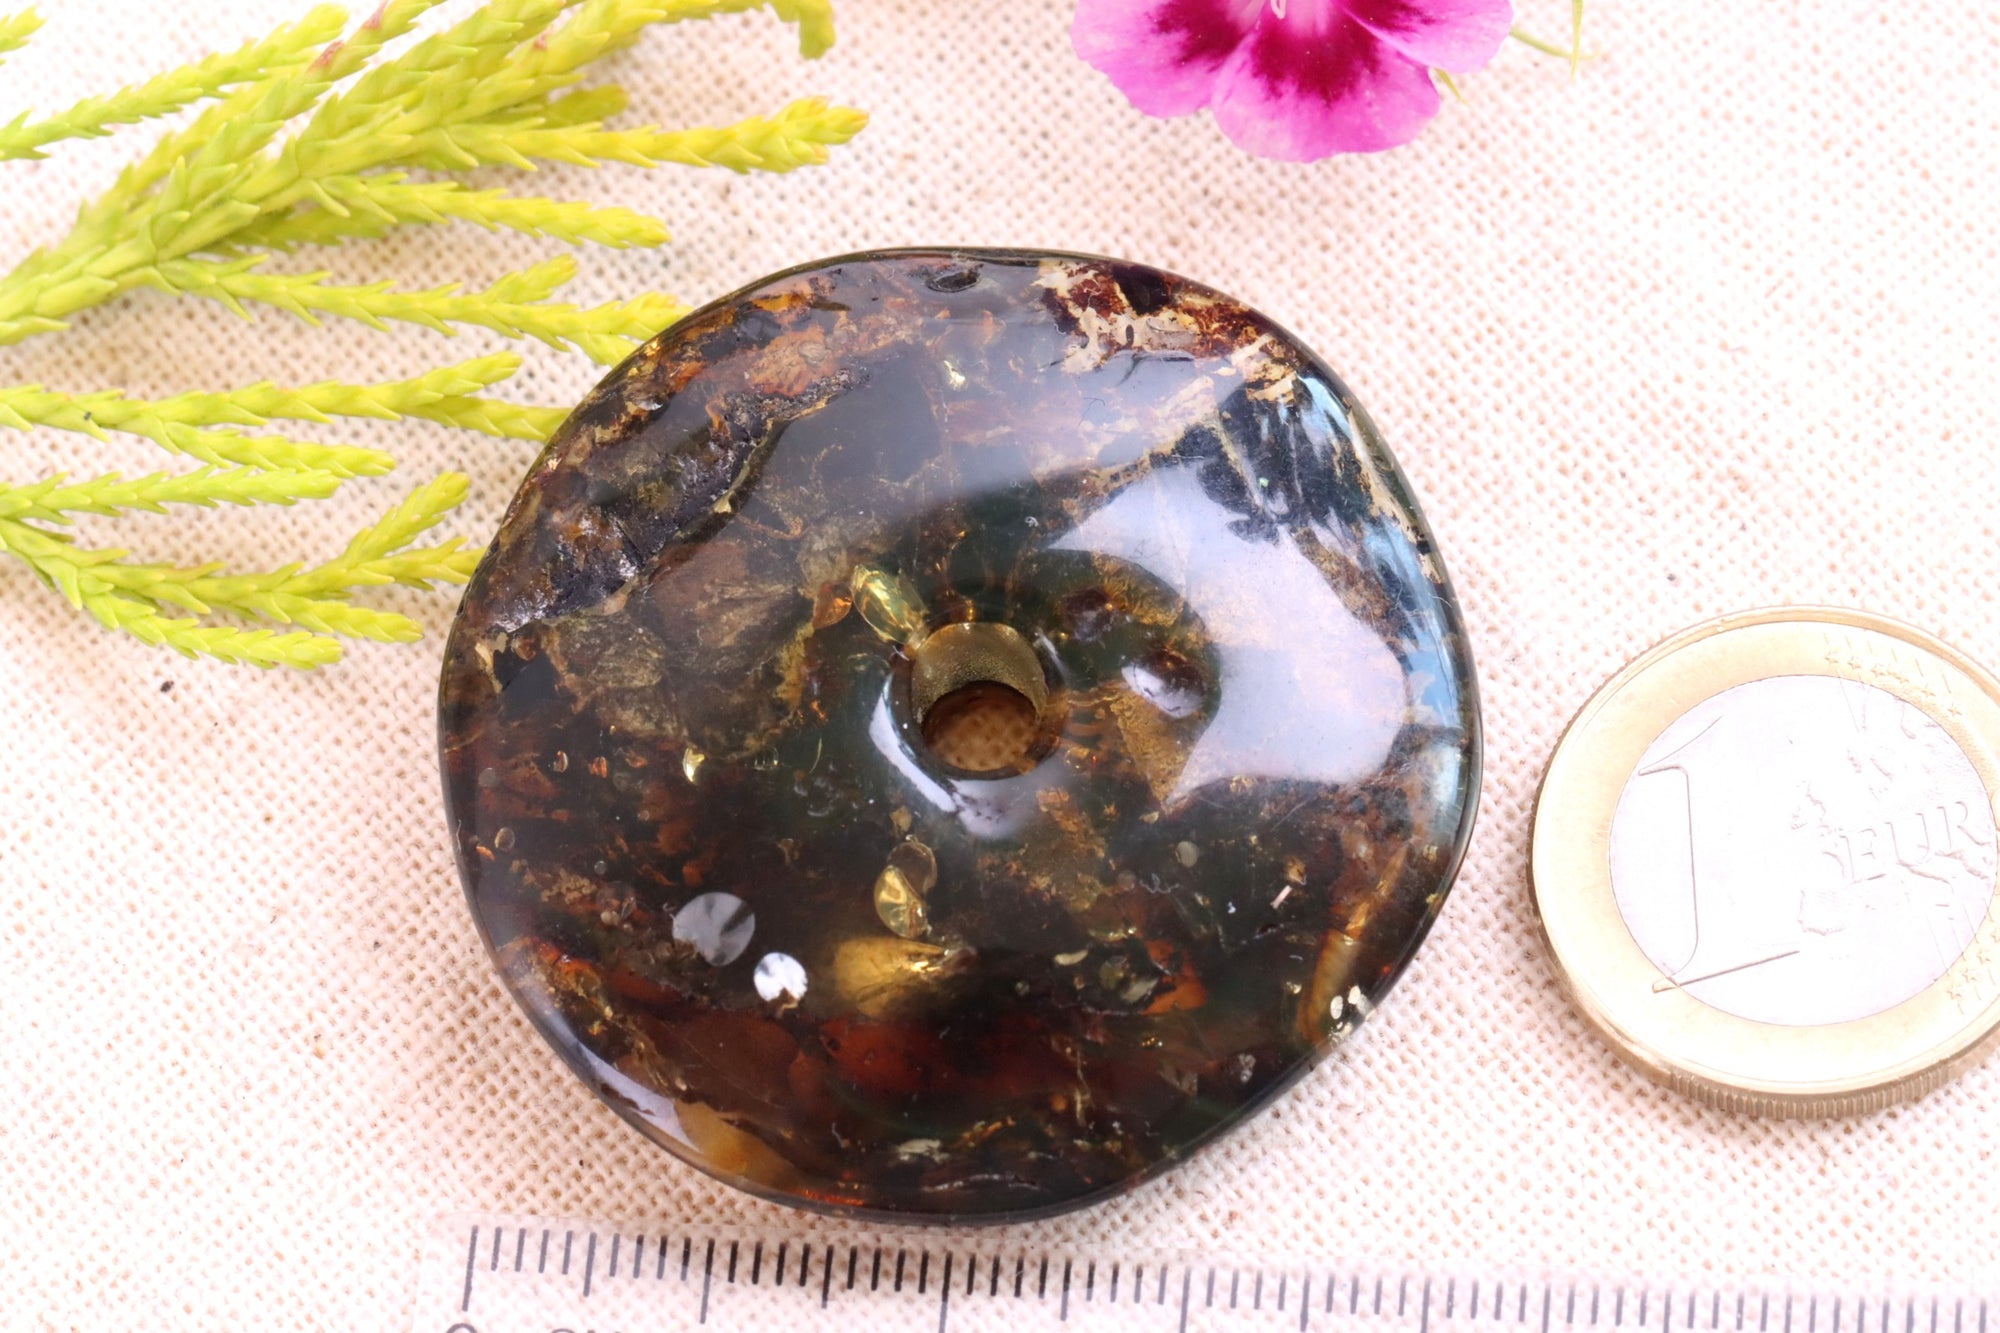 Healing Energy Natural Baltic Amber Gem Donut Amulet